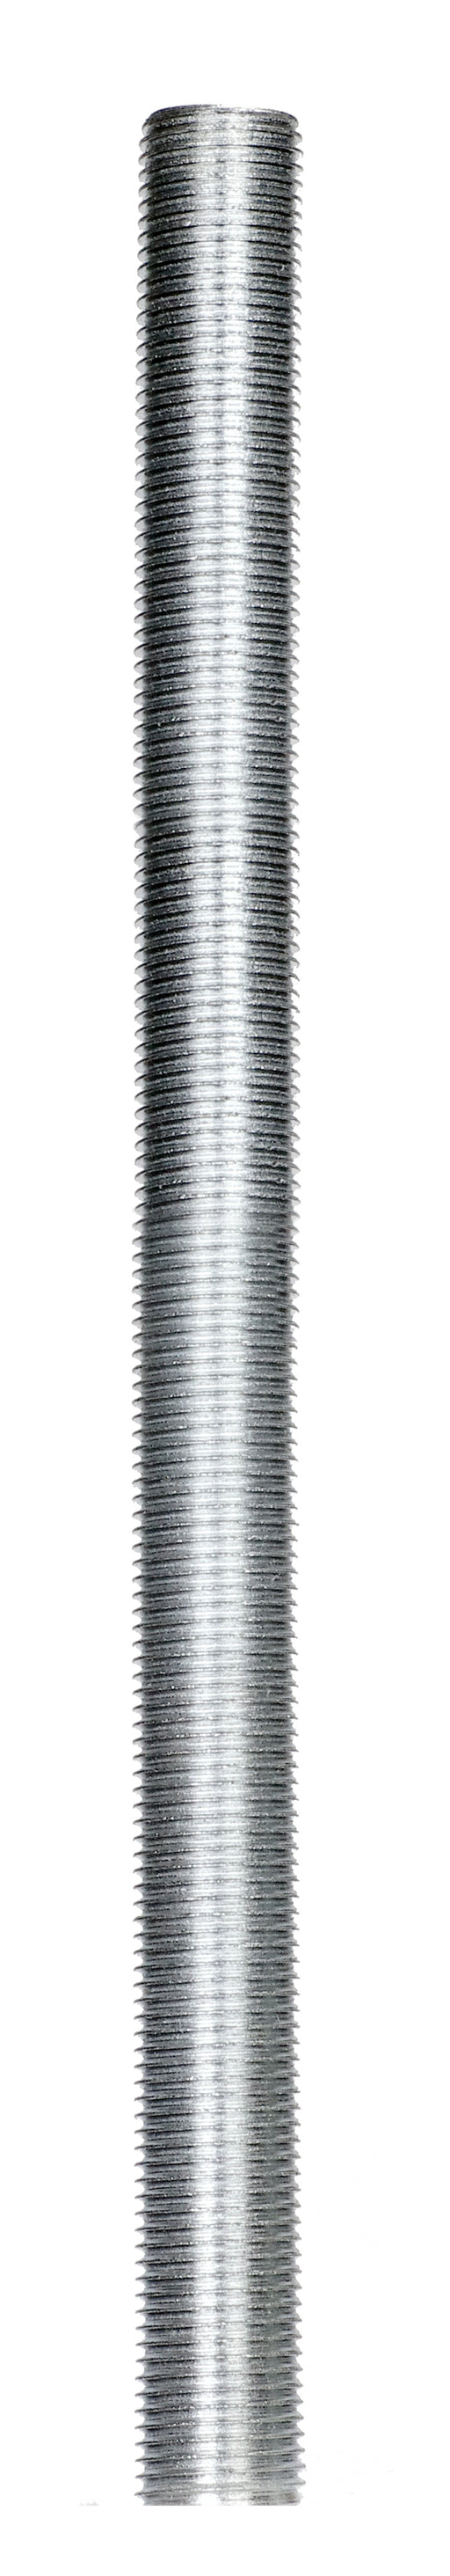 SATCO/NUVO 1/8 IP Steel Nipple Zinc Plated 5-1/4 Inch Length 3/8 Inch Wide (90-1030)